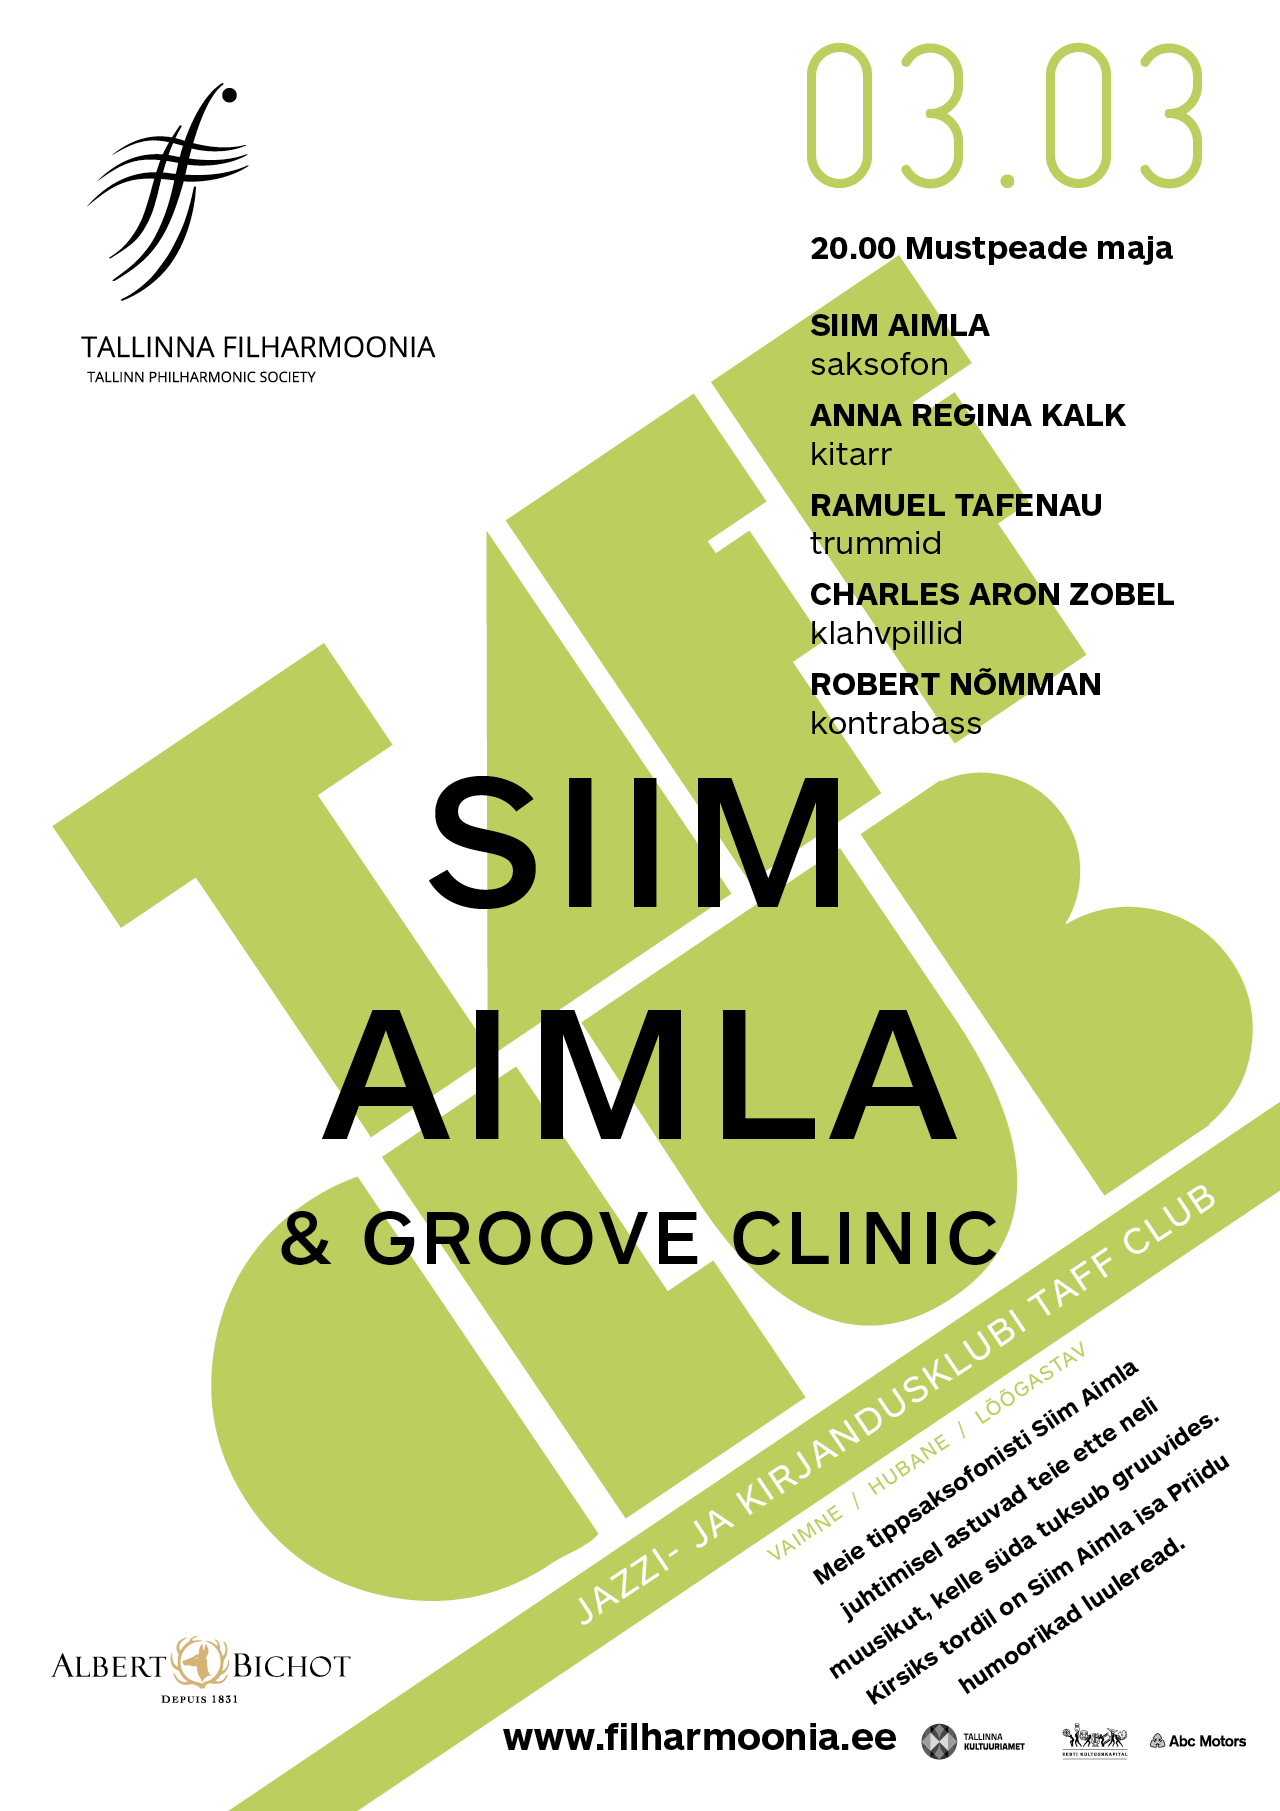 TAFF CLUB. SIIM AIMLA & GROOVE CLINIC